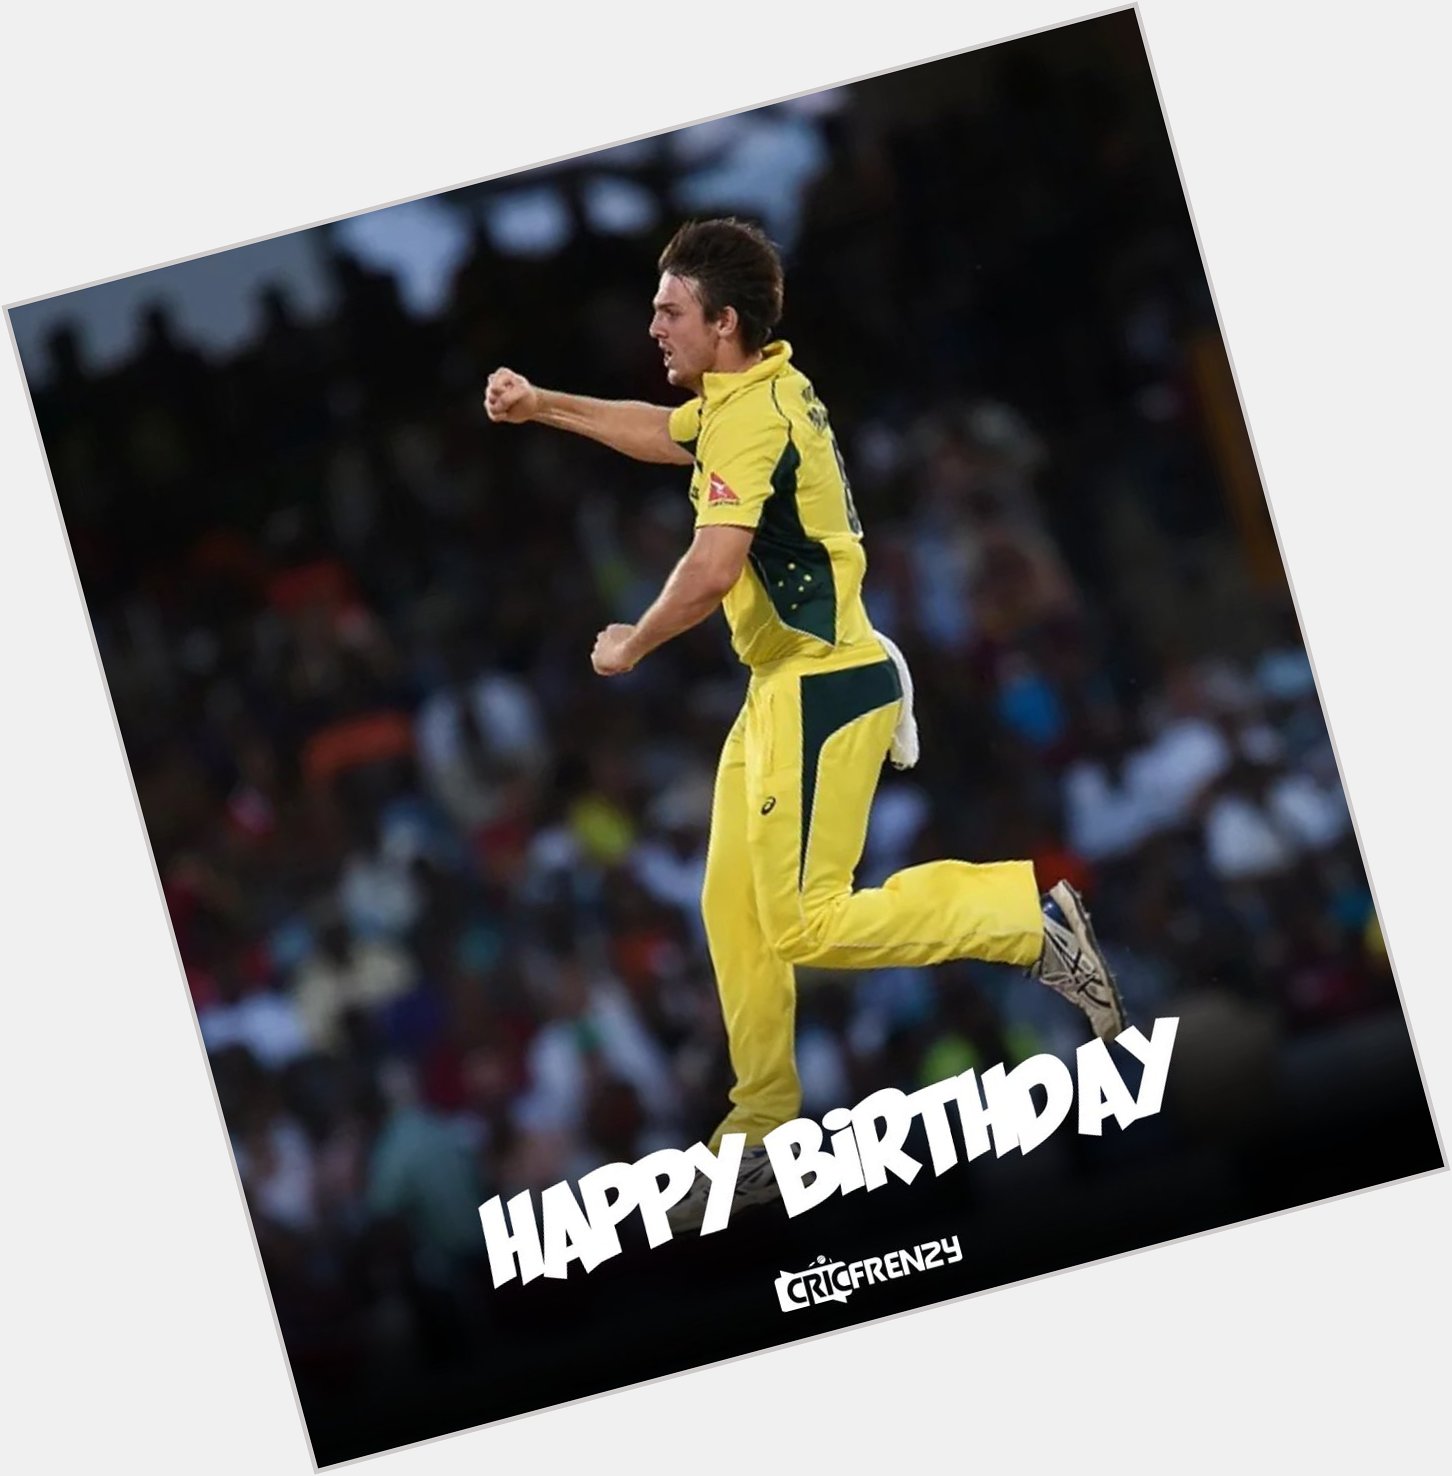  2015 Cricket World Cup winner
Happy birthday Mitchell Marsh 